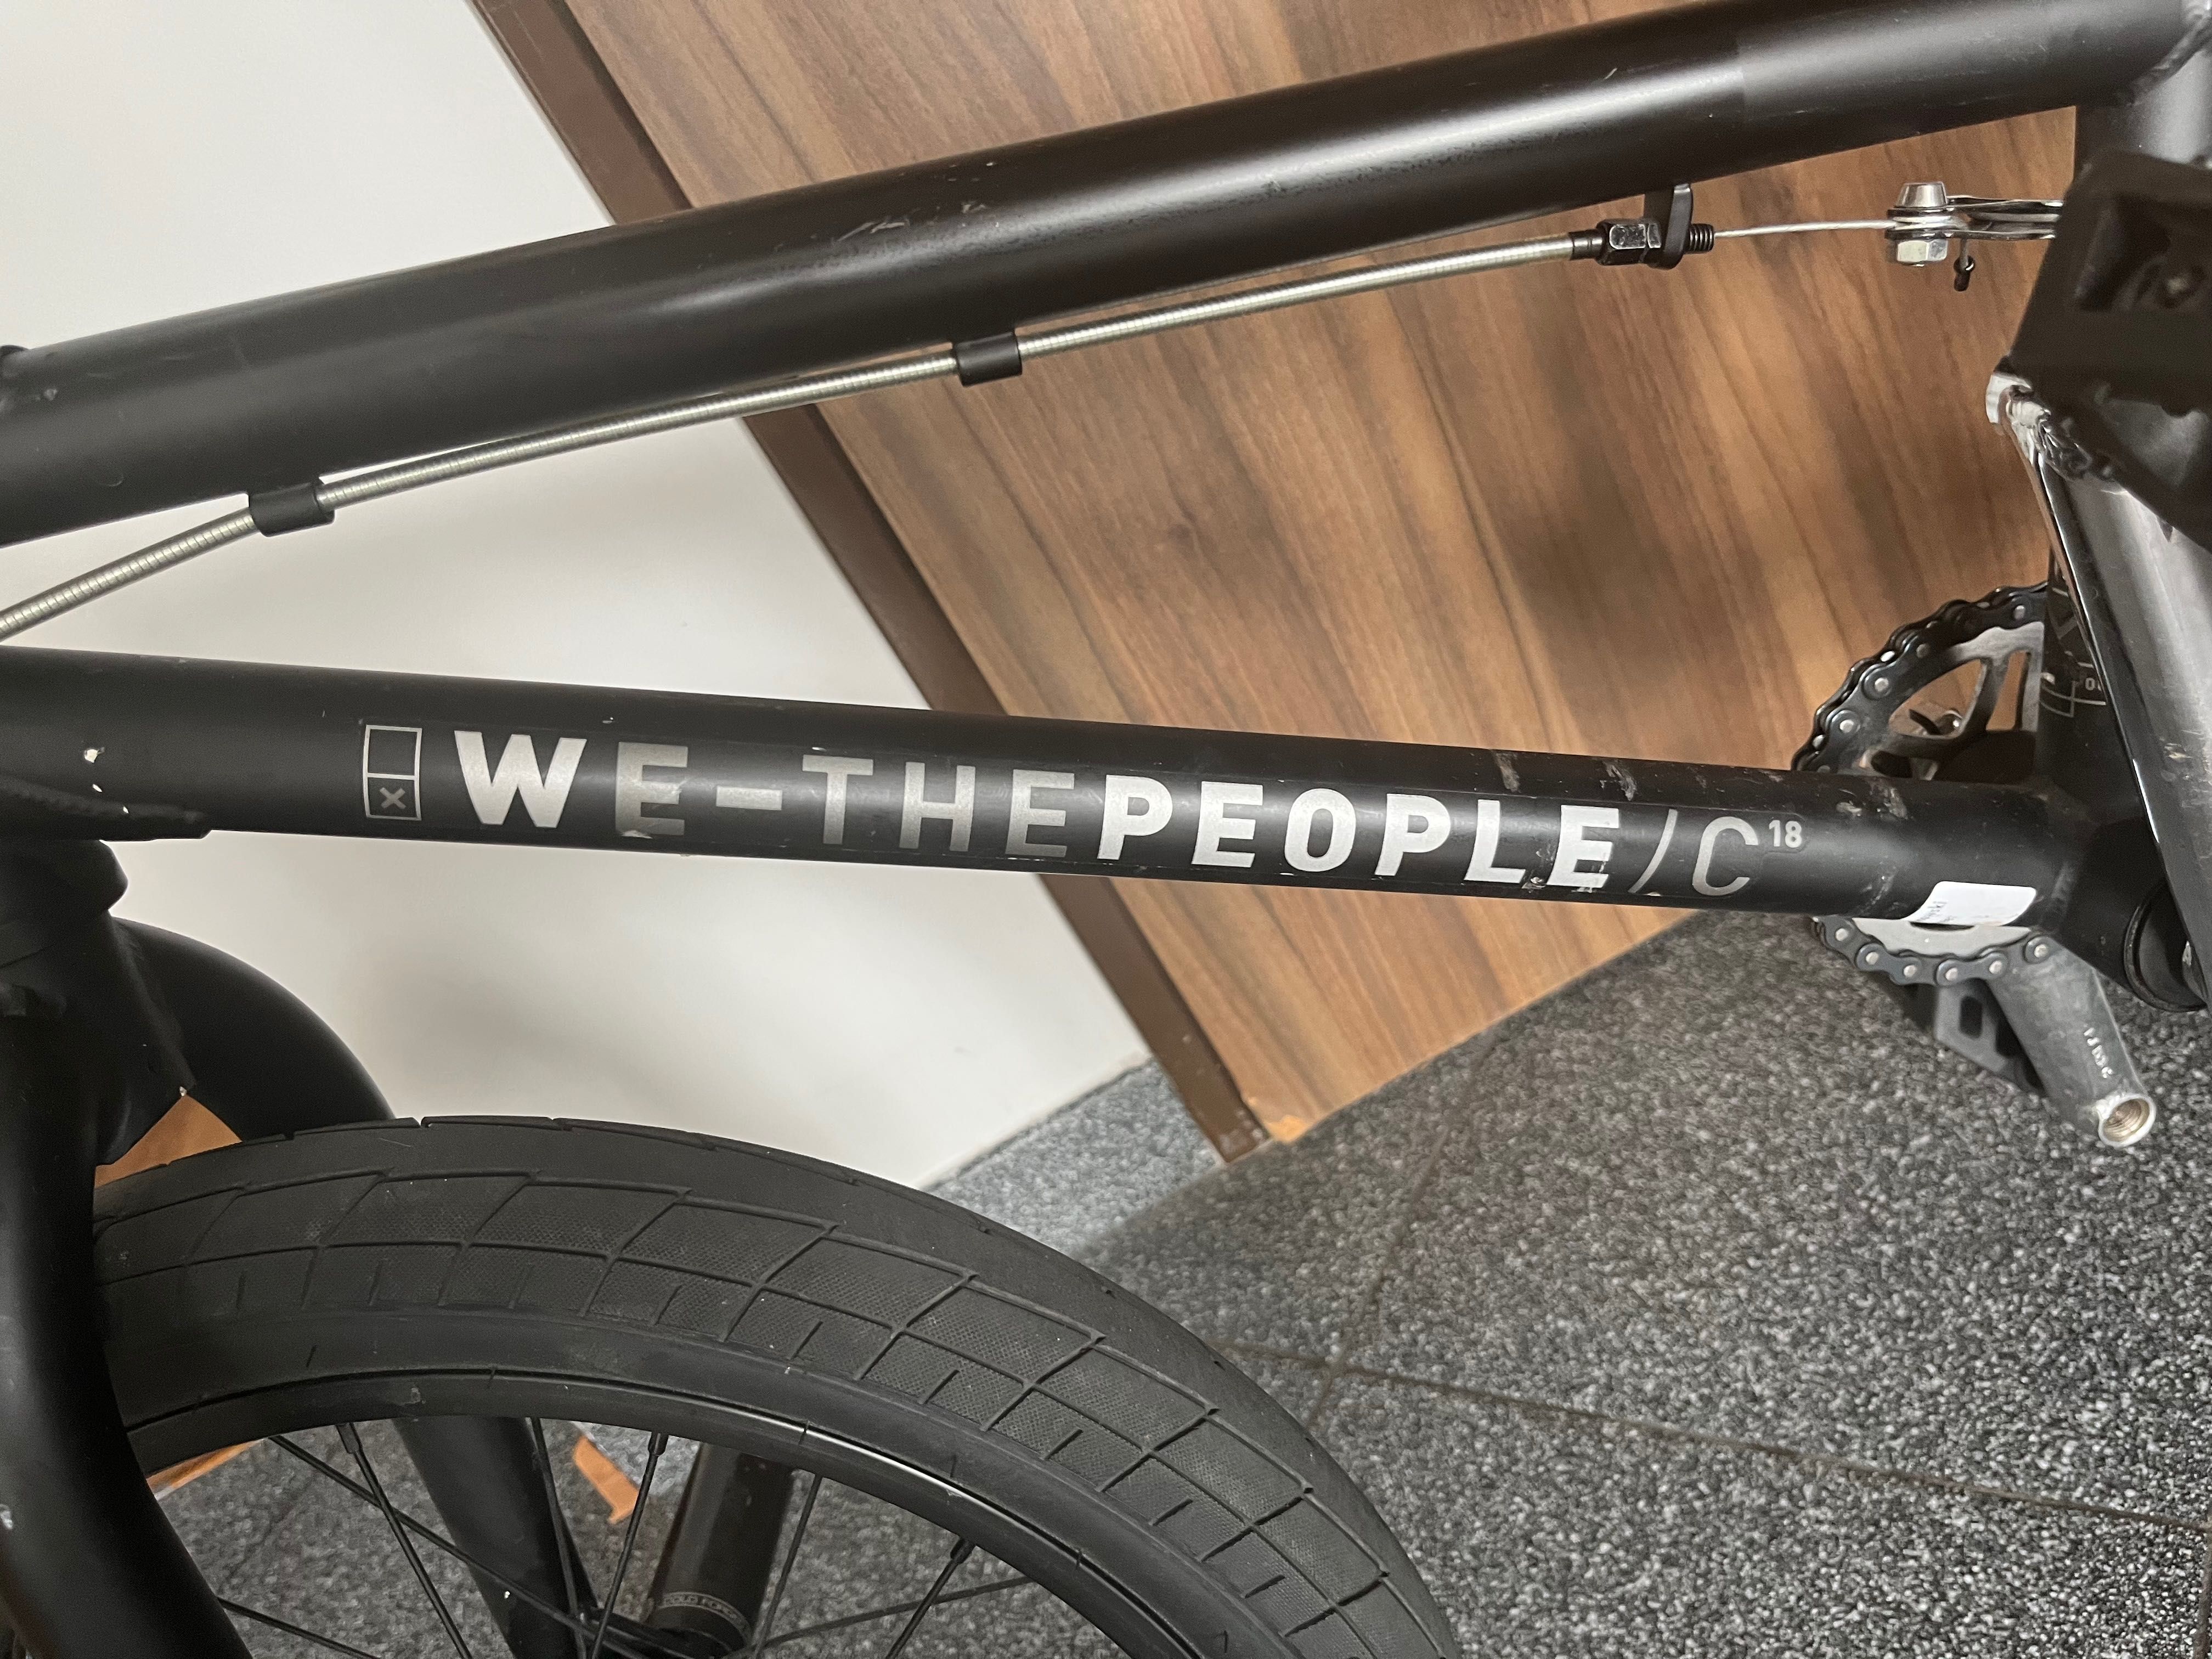 BMX We-the people